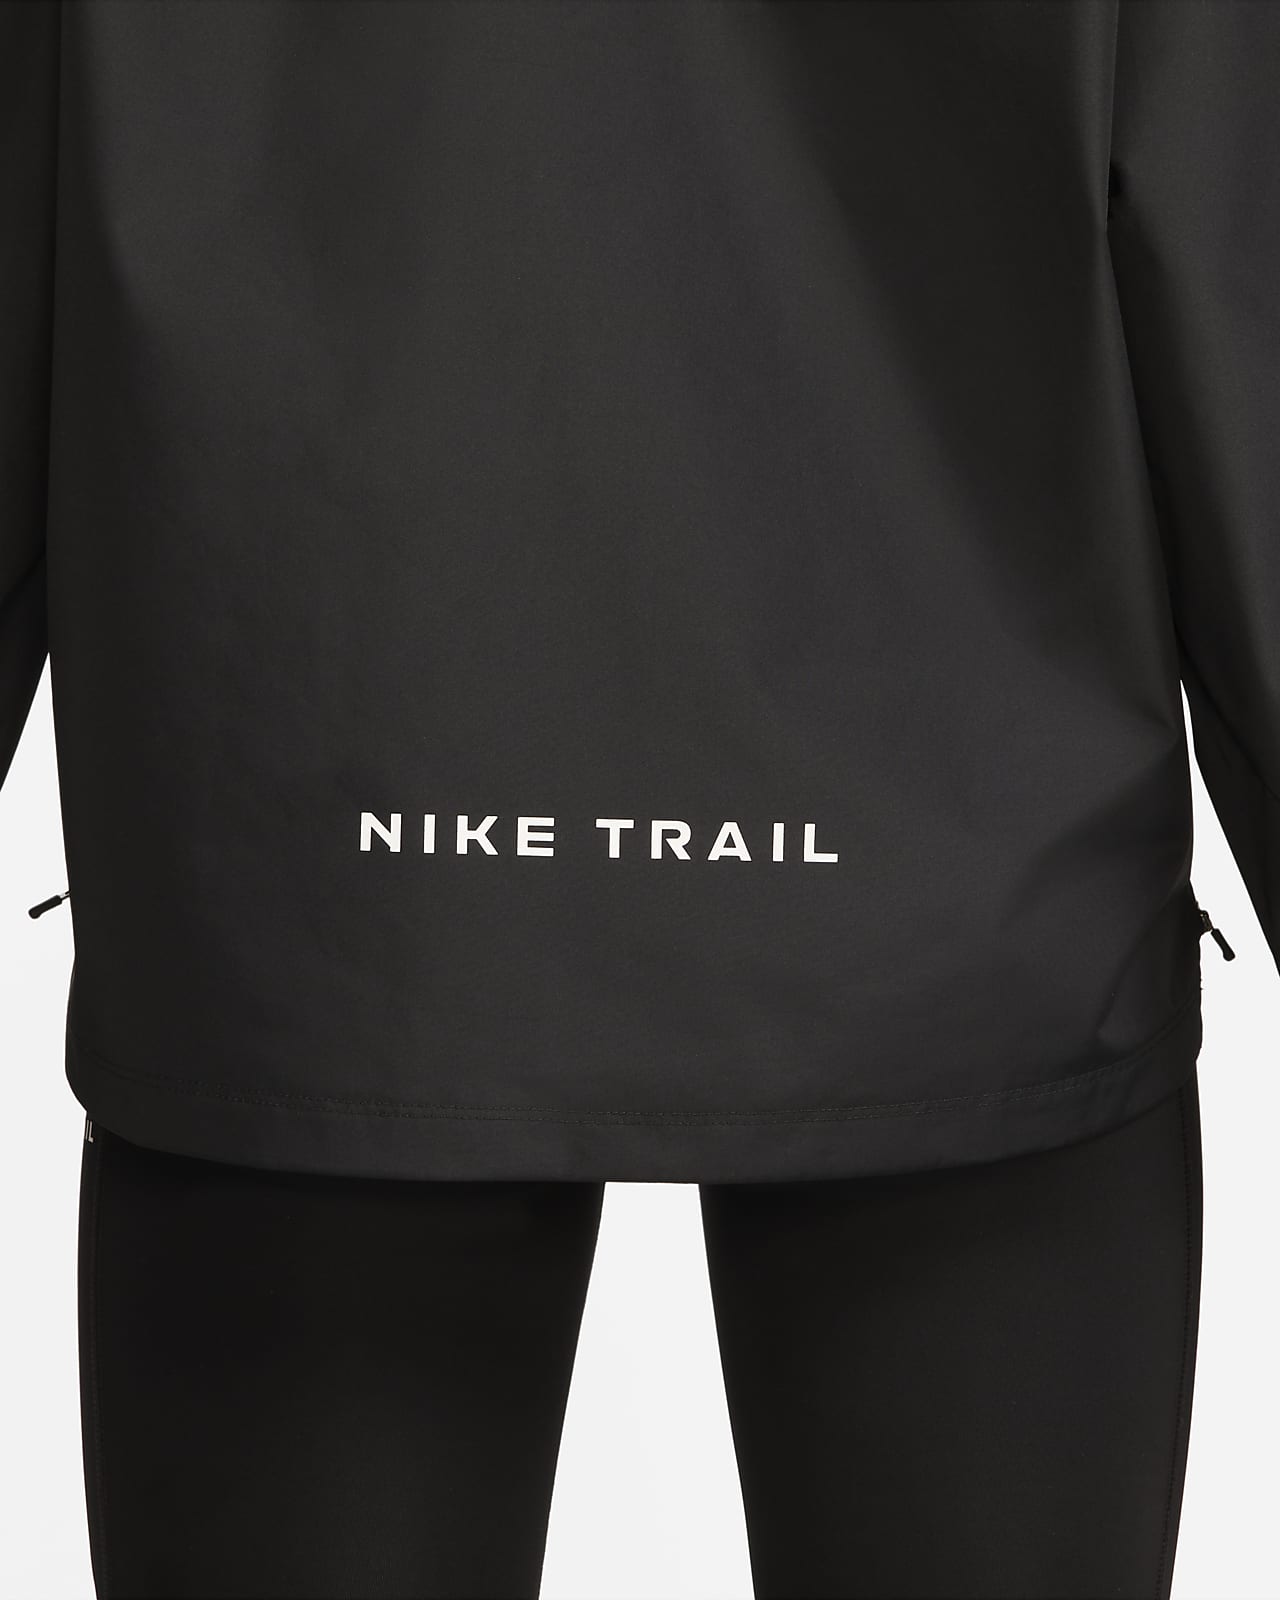 Nike Trail GORE-TEX INFINIUM™ Women's Trail Running Jacket